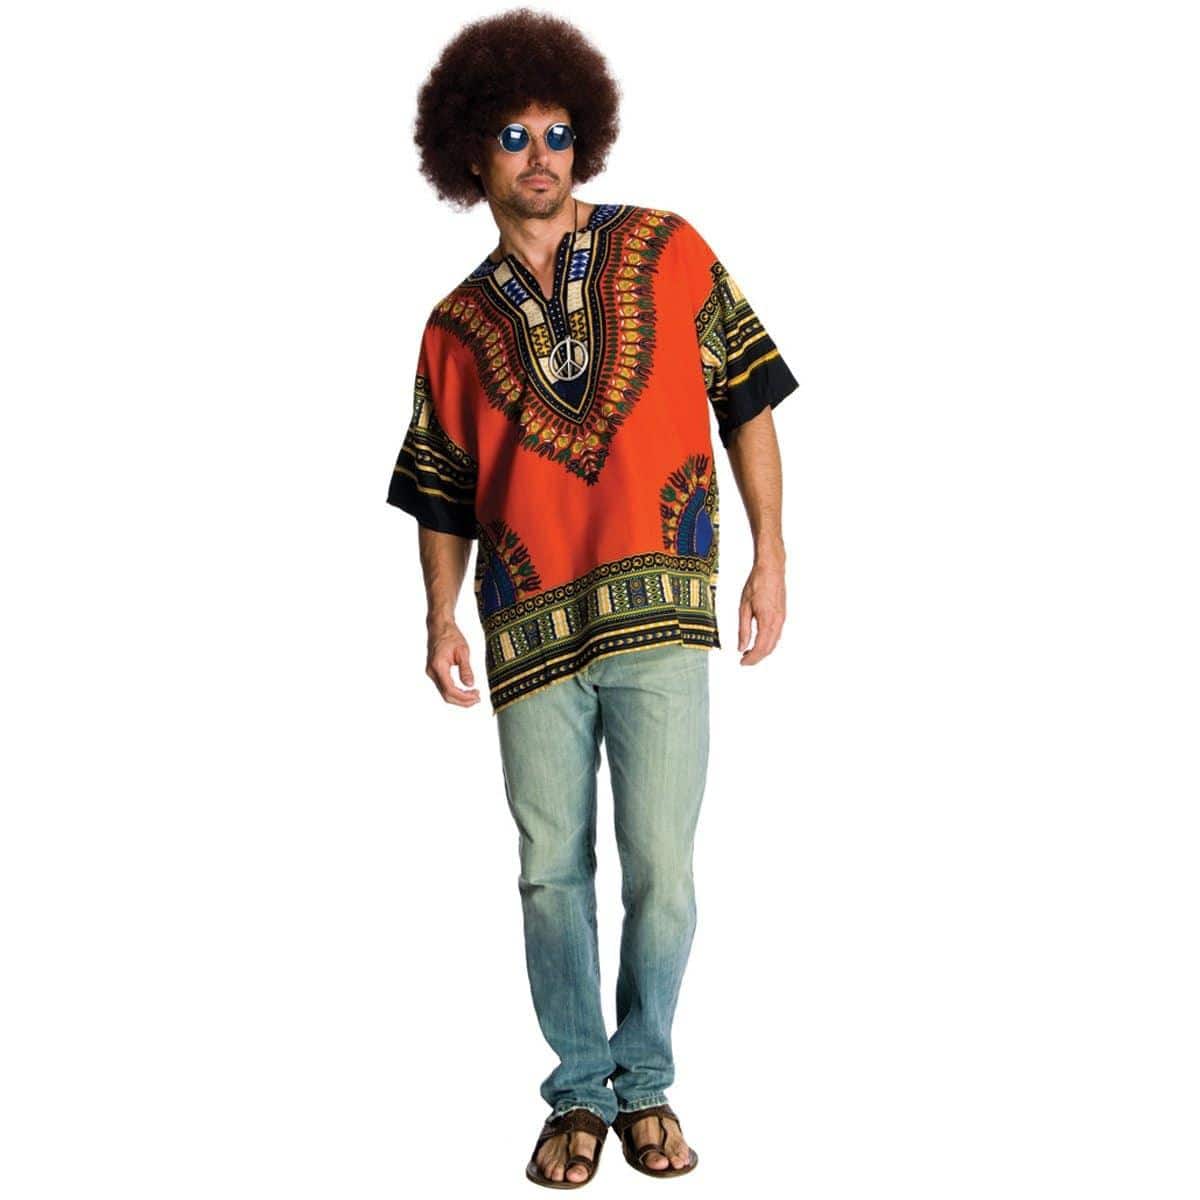 Adult Free Spirit Hippie Costume 